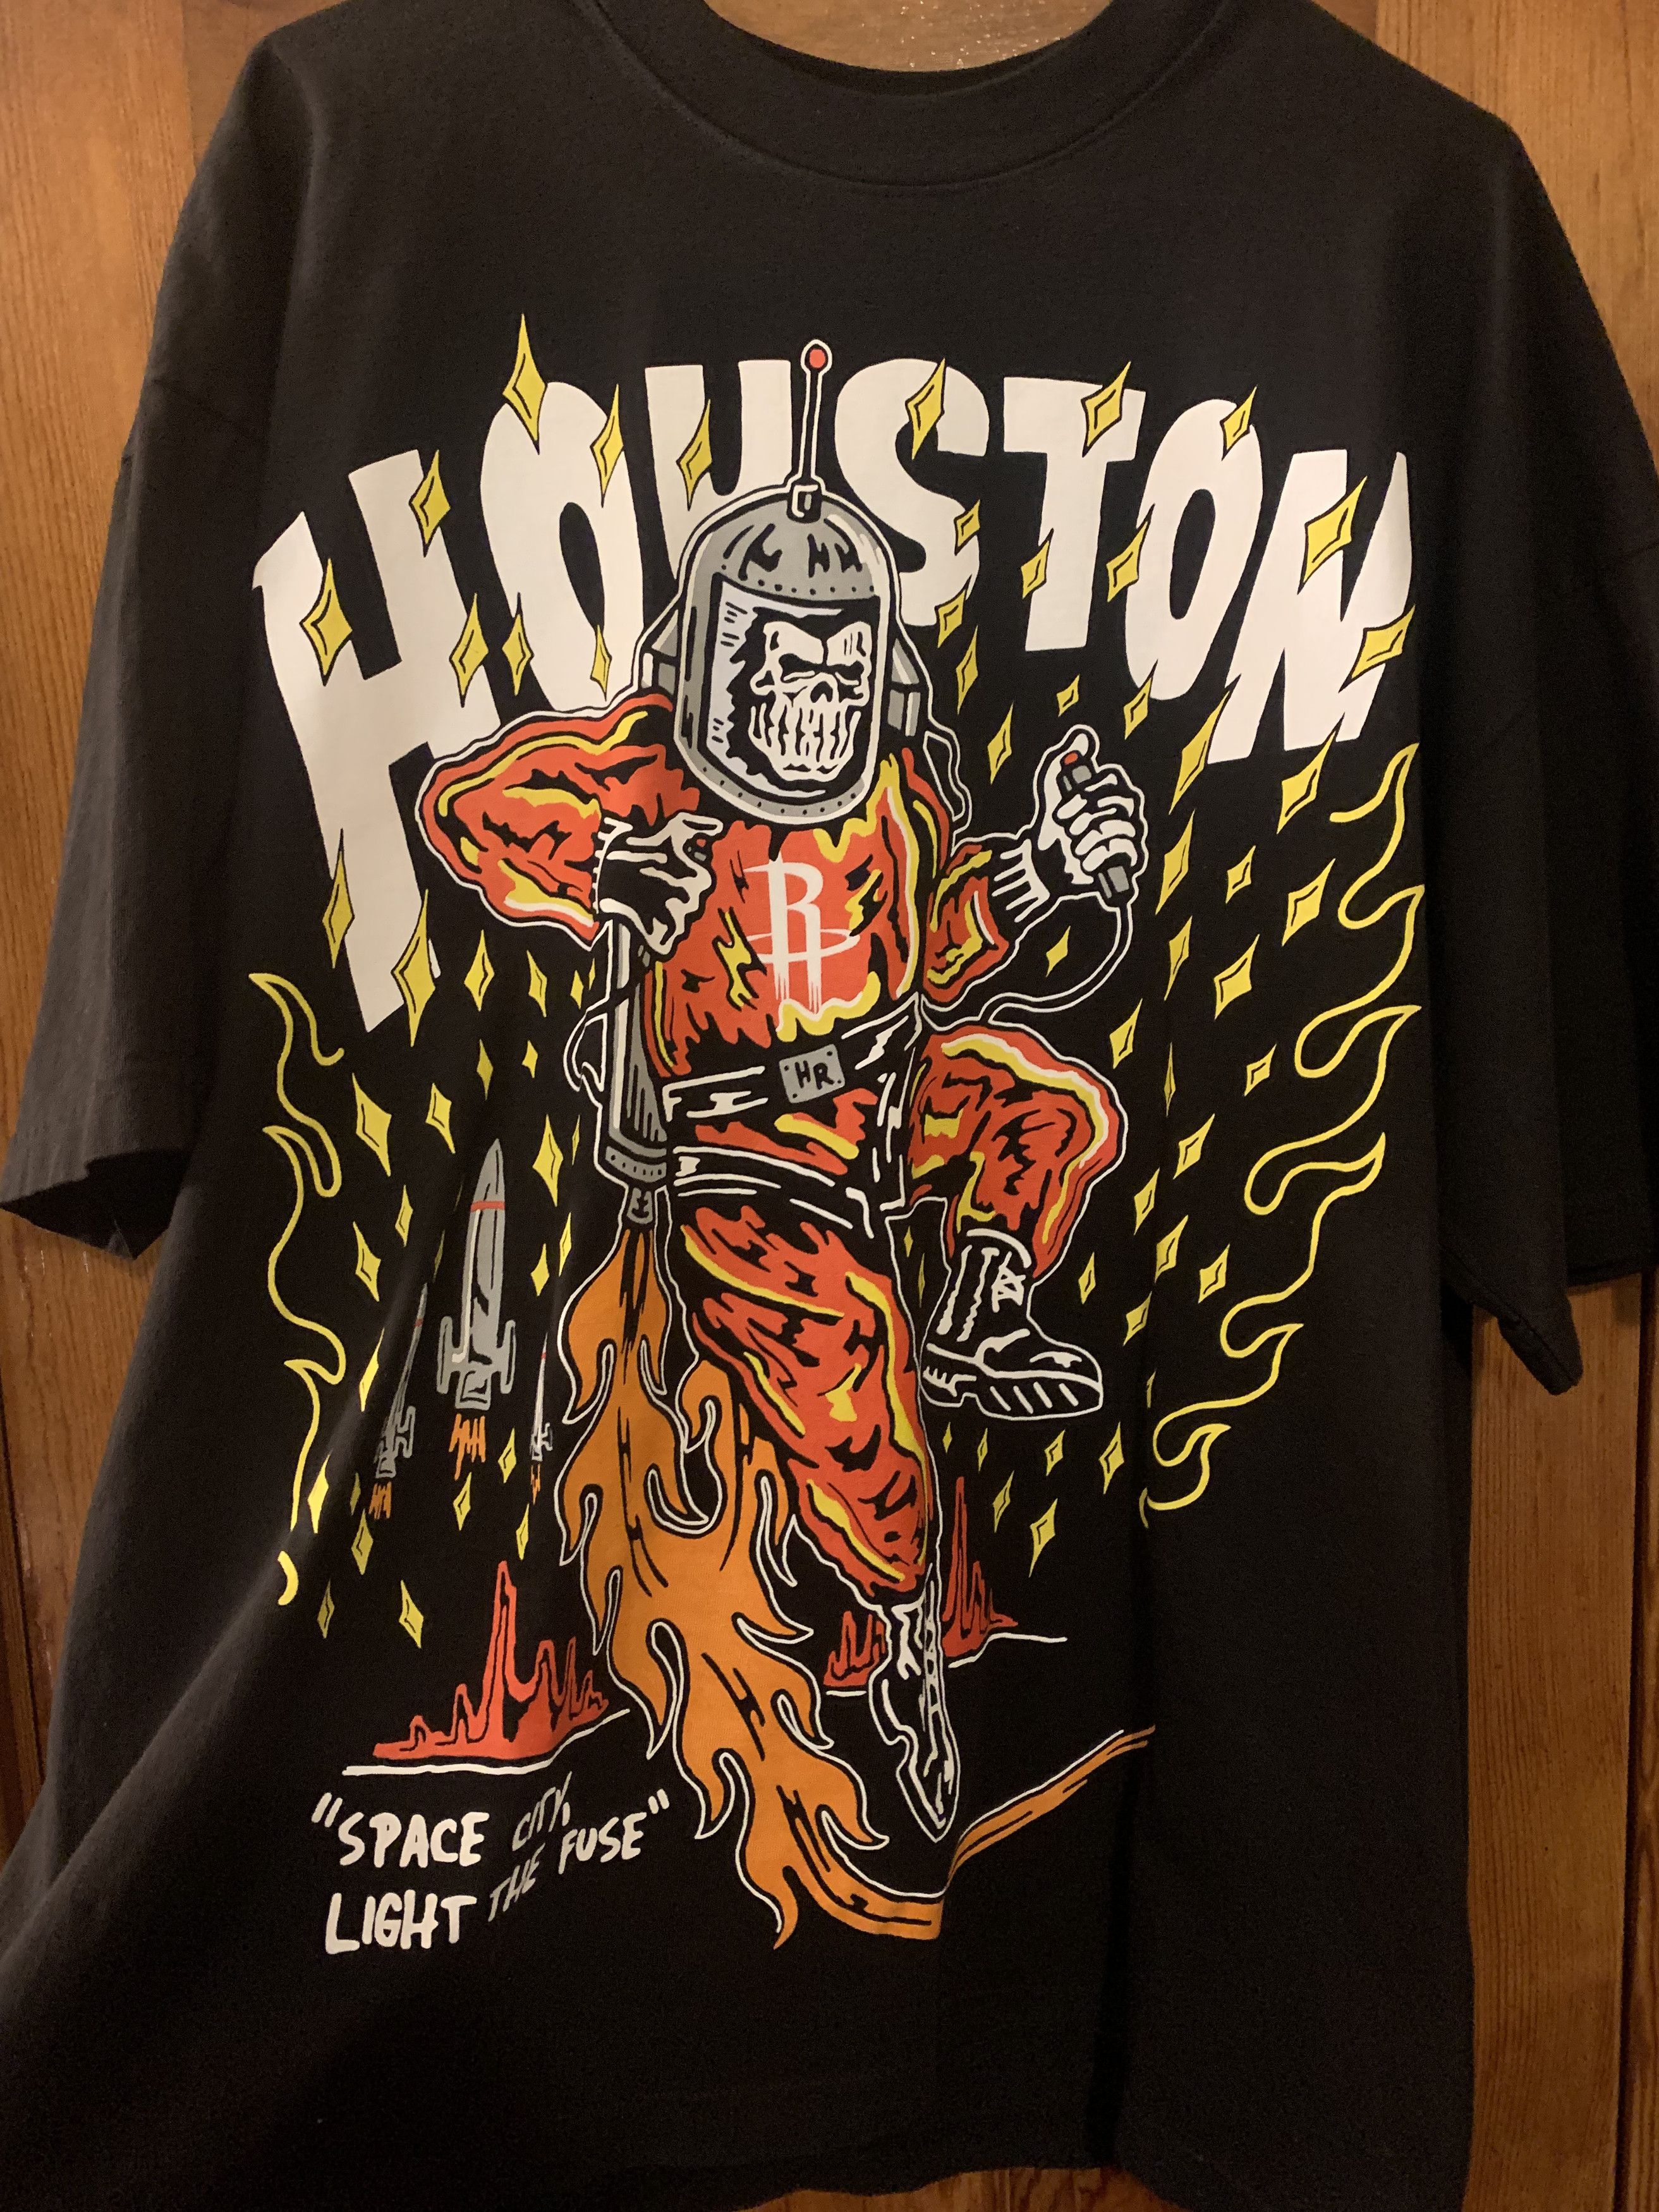 Warren Lotas Houston Rockets Houston,Texas Space City NBA T Shirt - Ink In  Action